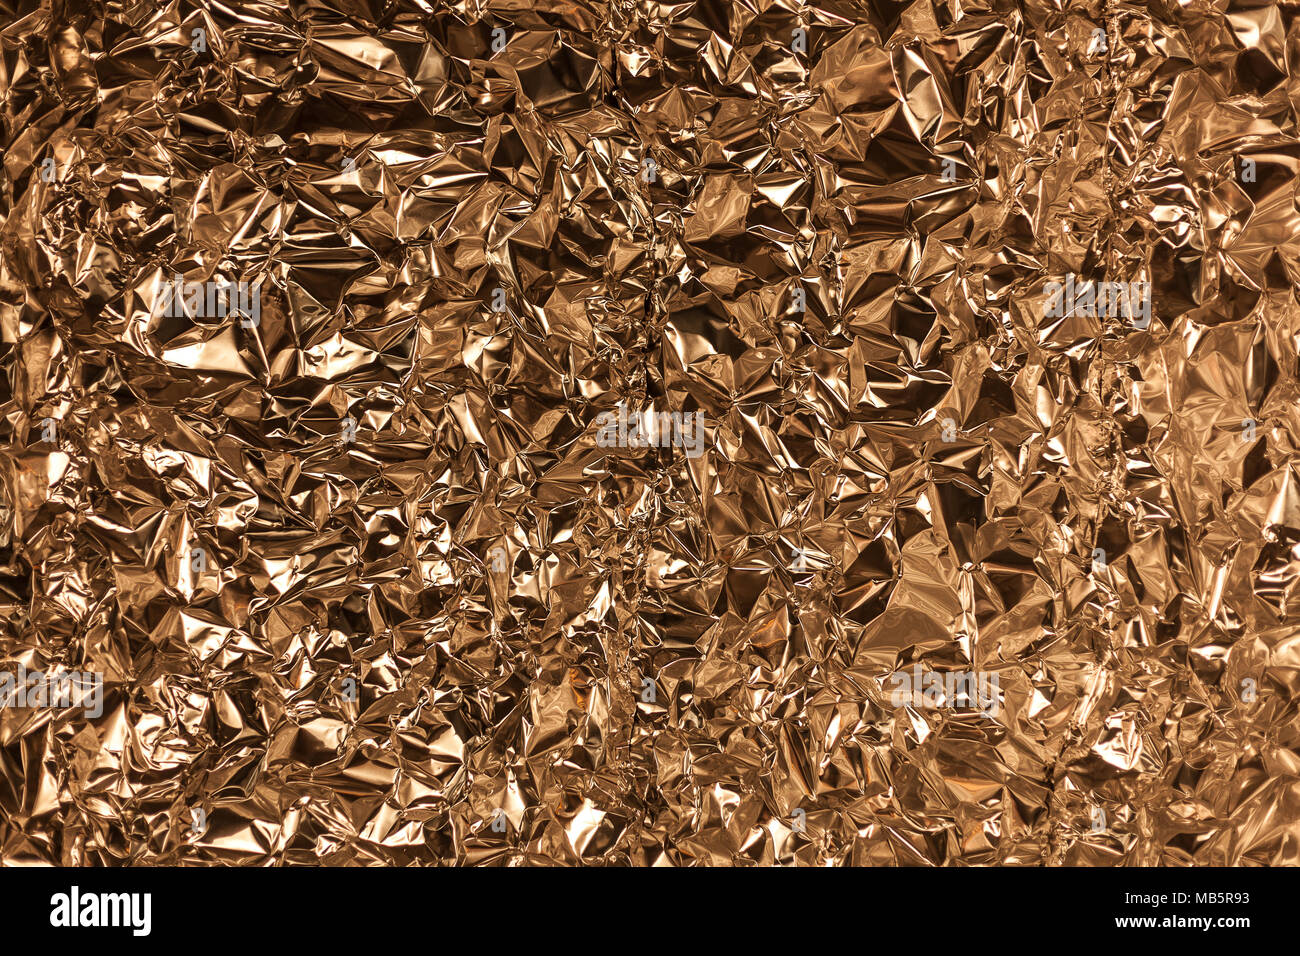 https://c8.alamy.com/comp/MB5R93/full-frame-take-of-a-sheet-of-crumpled-gold-aluminum-foil-background-MB5R93.jpg